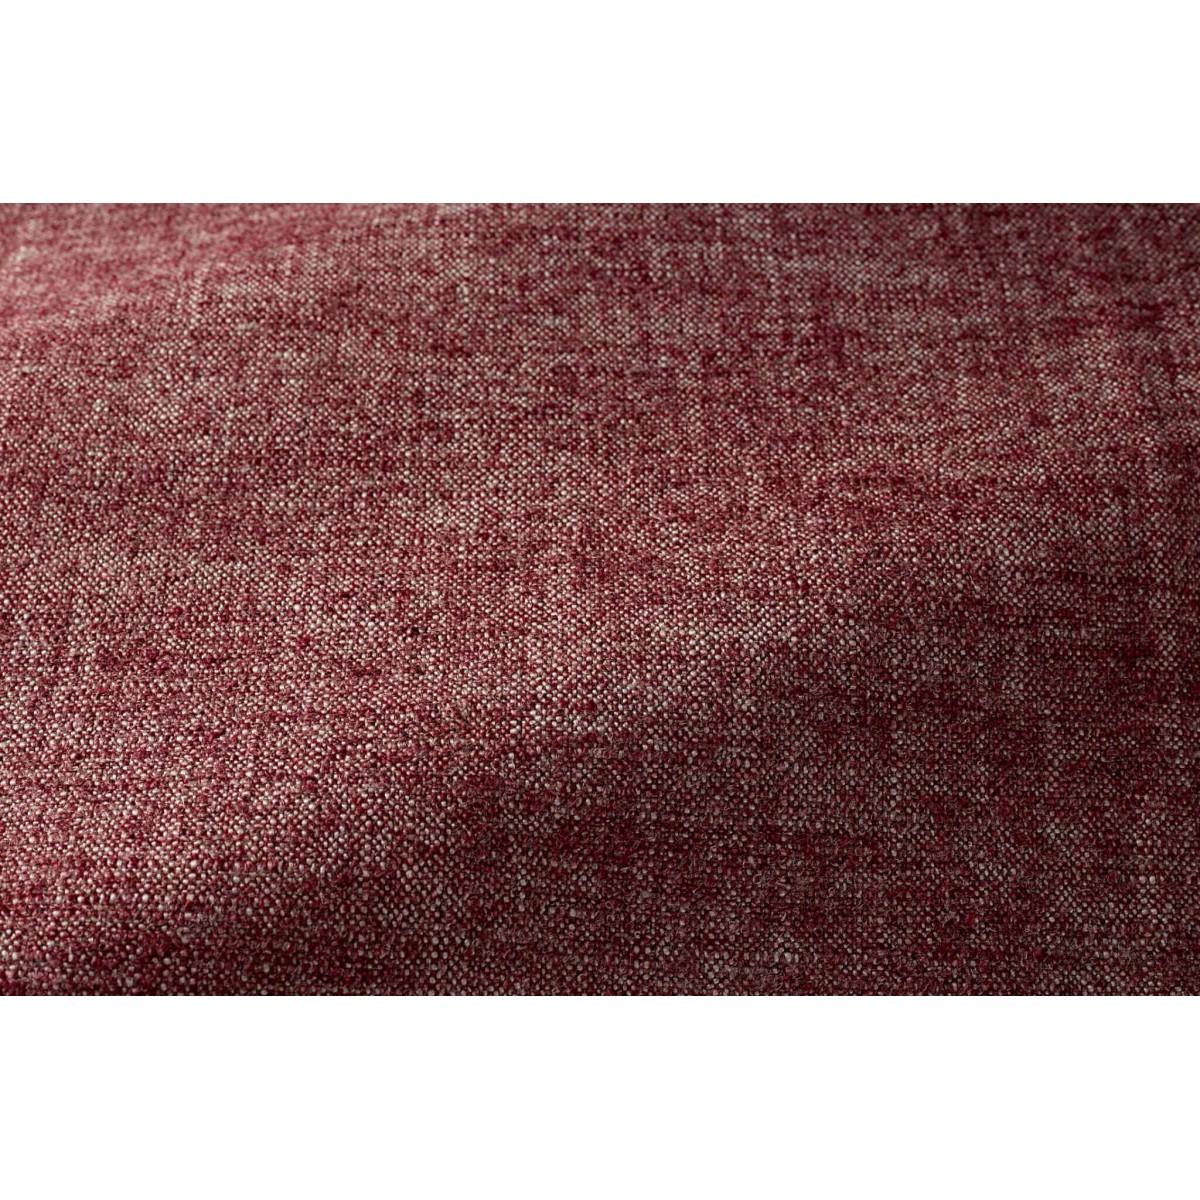 Popus Editions Graziella 4 Seater Sofa in Sangria London Linen Fabric In New Condition For Sale In Paris, FR